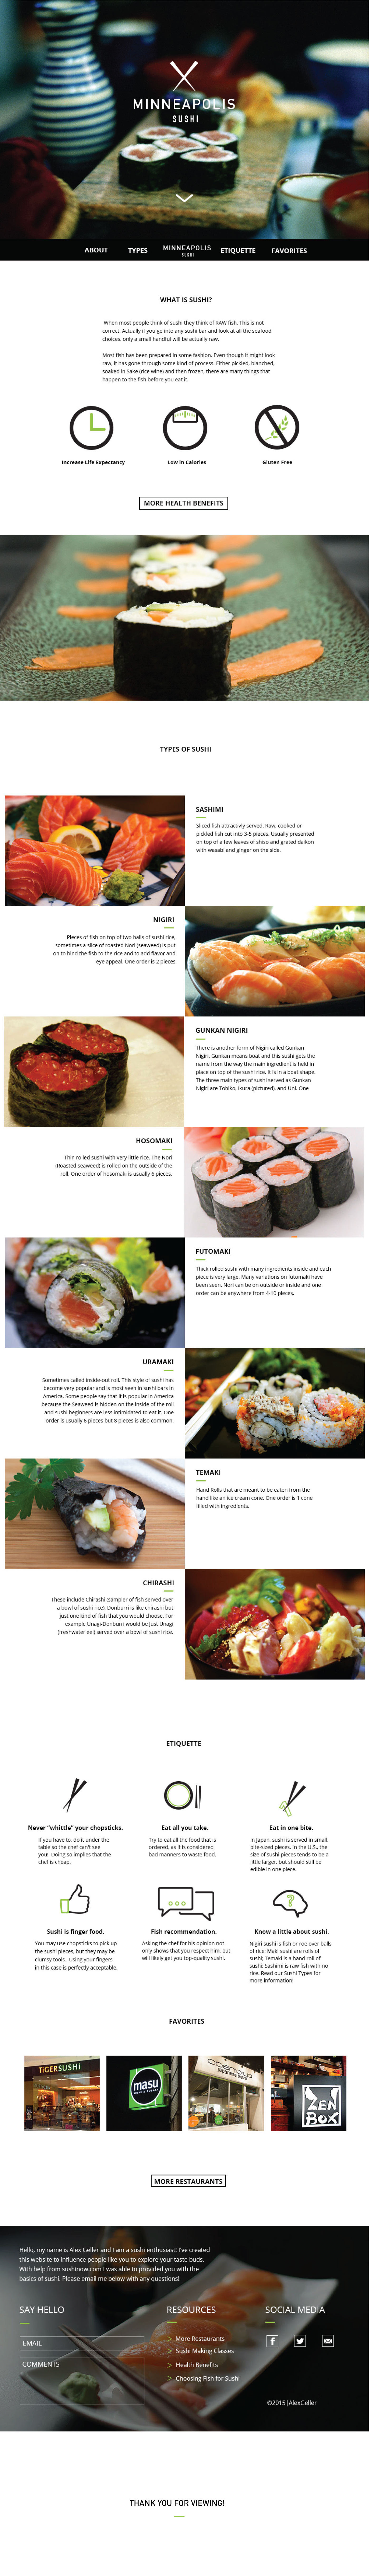 Sushi minneapolis Web design